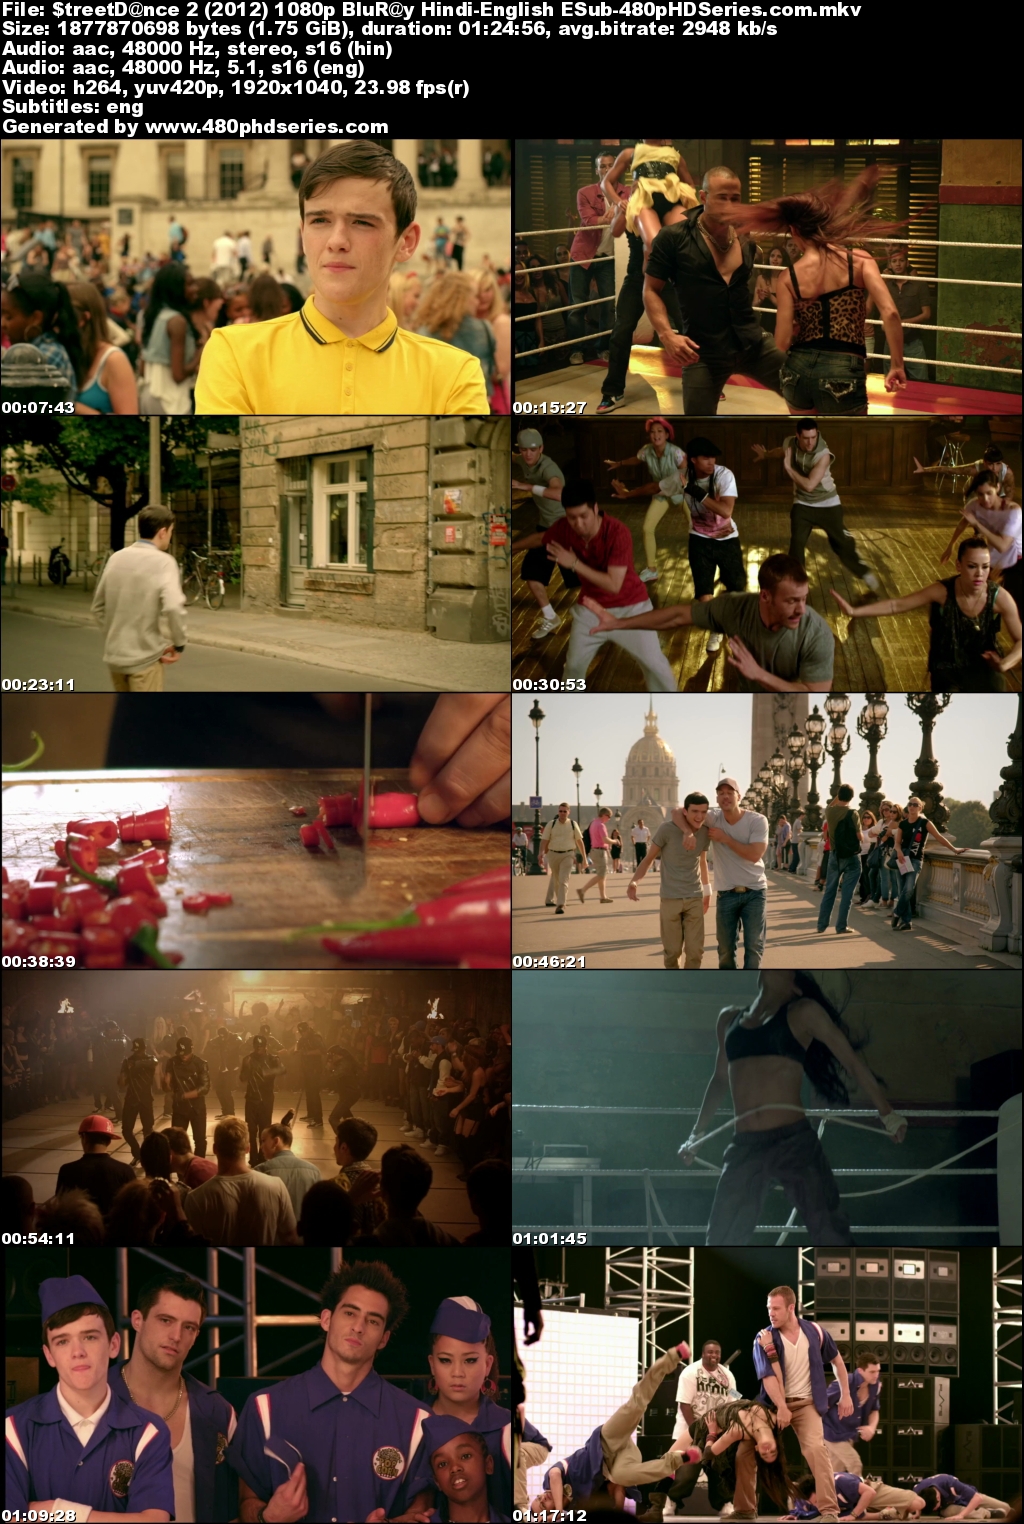 Watch Online Free StreetDance 2 (2012) Hindi Dual Audio BluRay 1080p 720p 480p